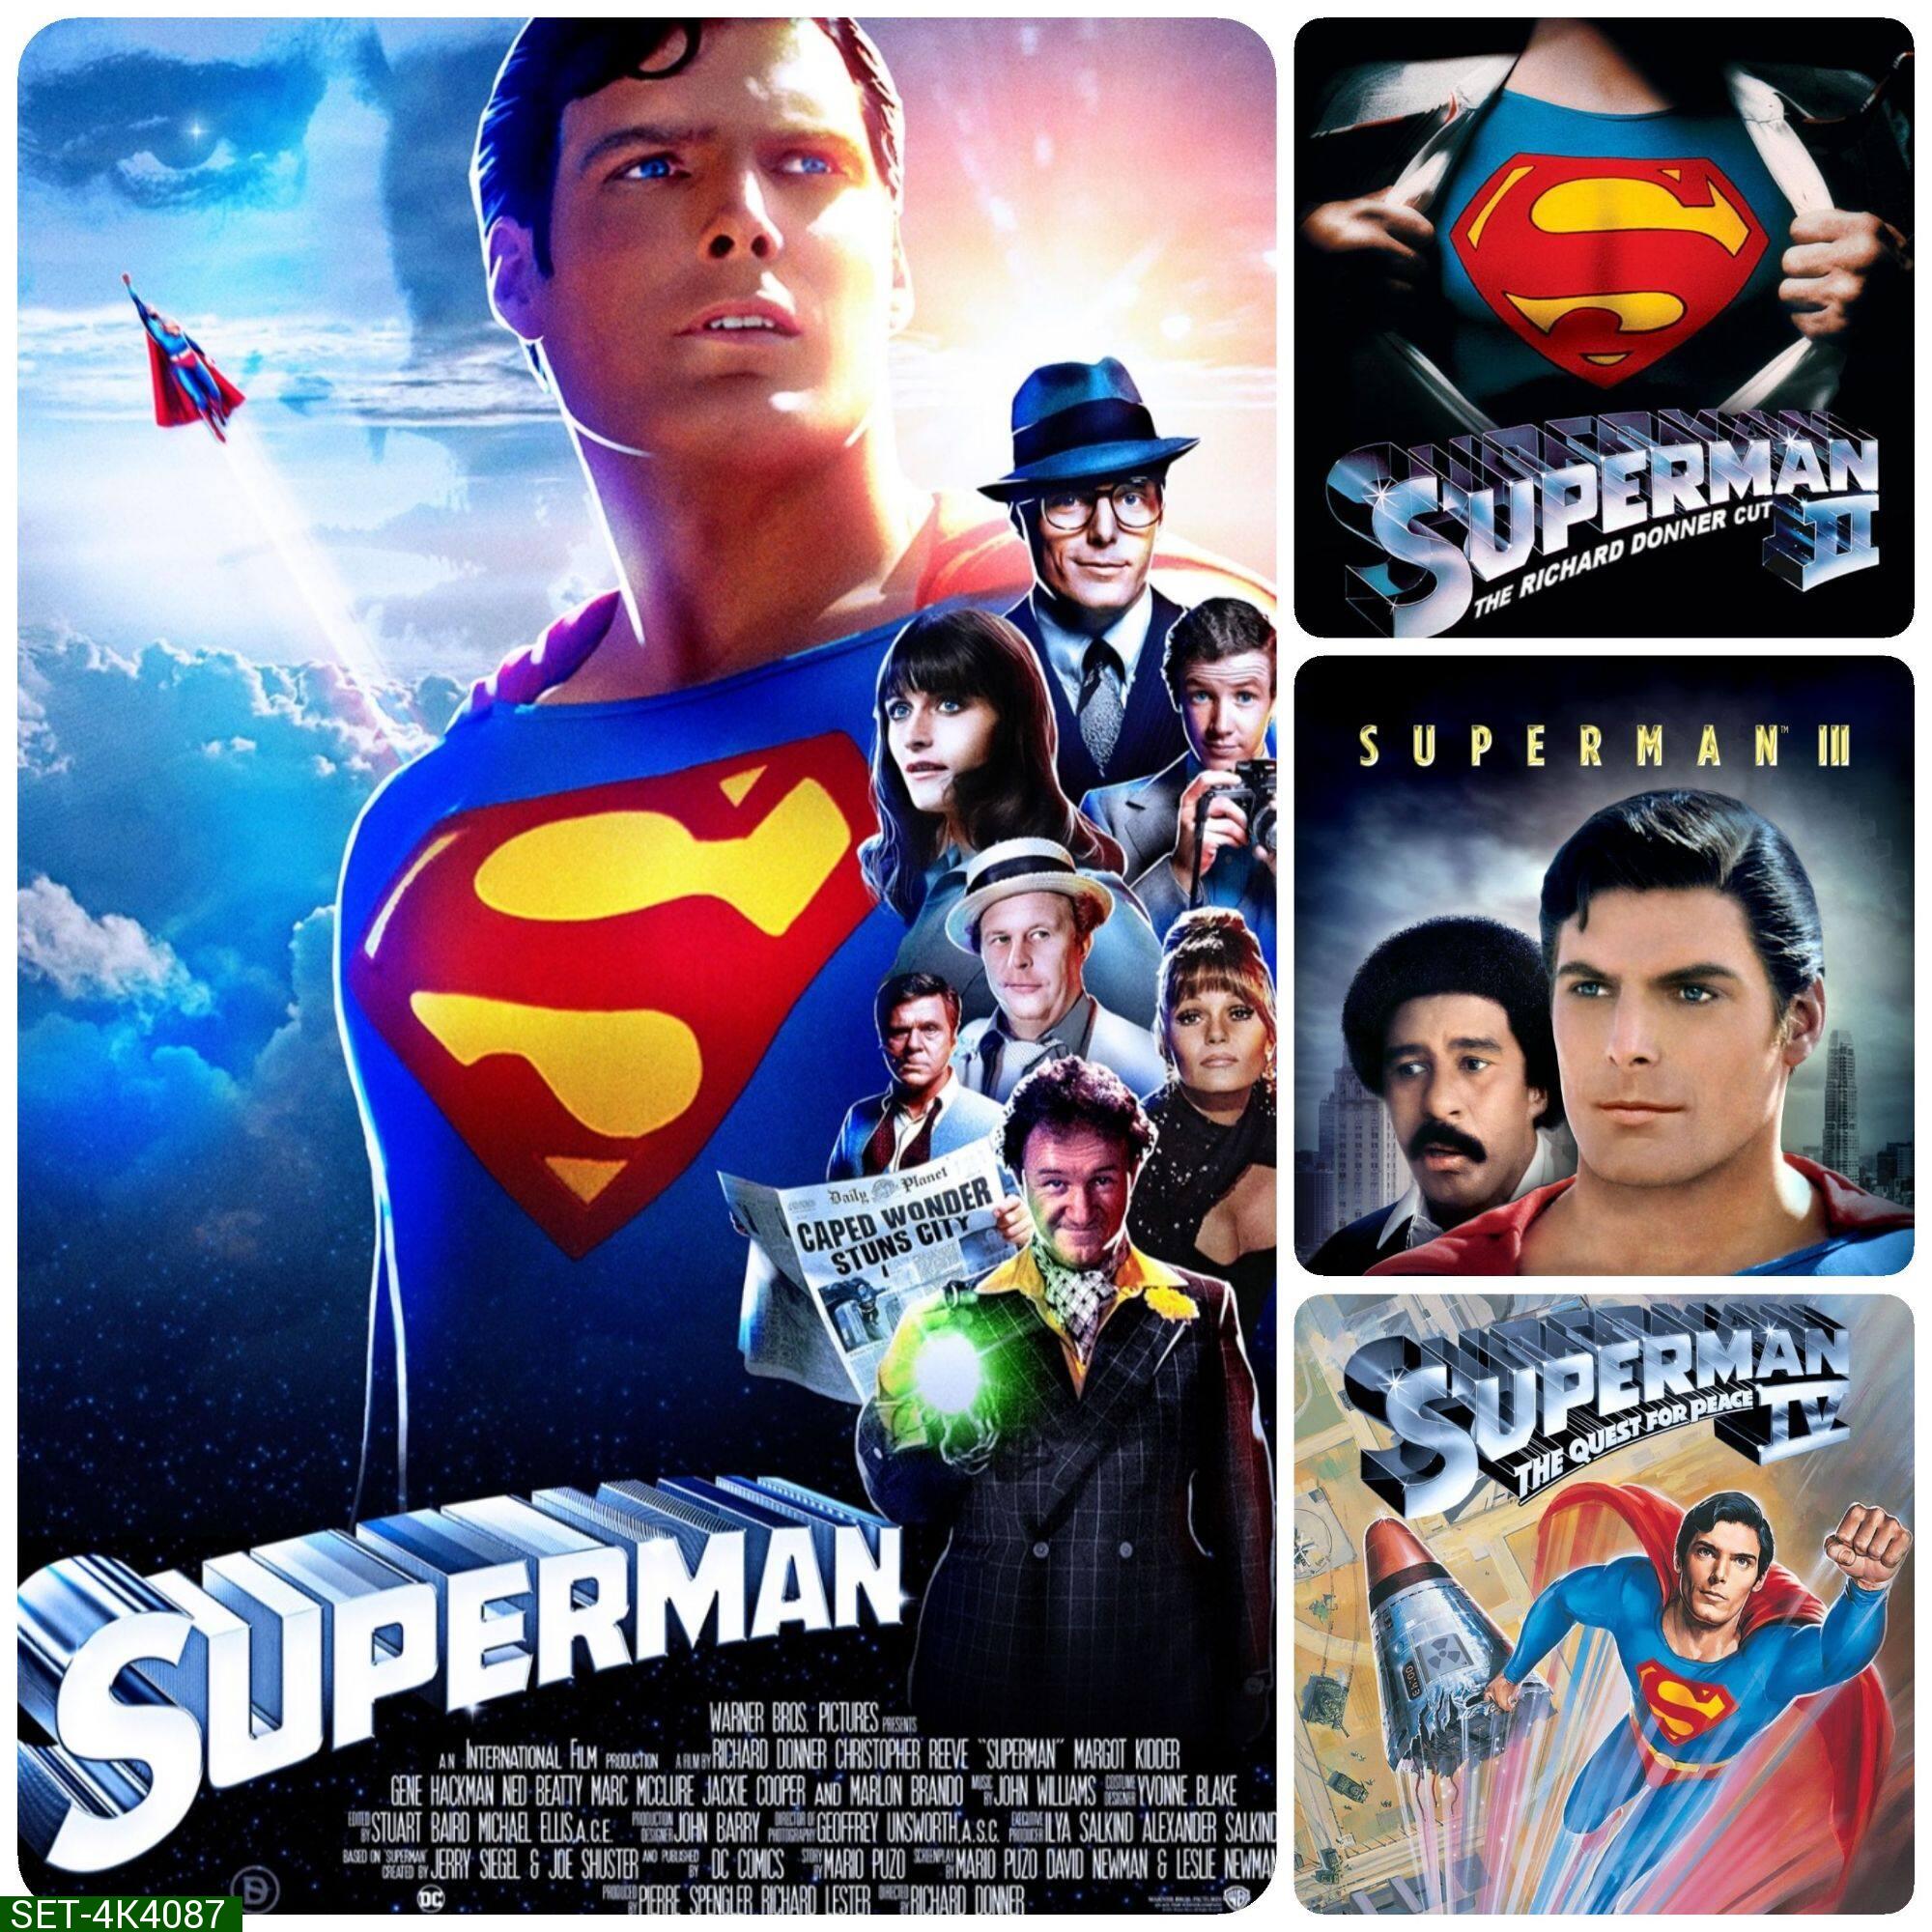 Superman 4K หนังราคาถูก พากย์ไทย/อังกฤษ/มีซับไทย มีเก็บปลายทาง